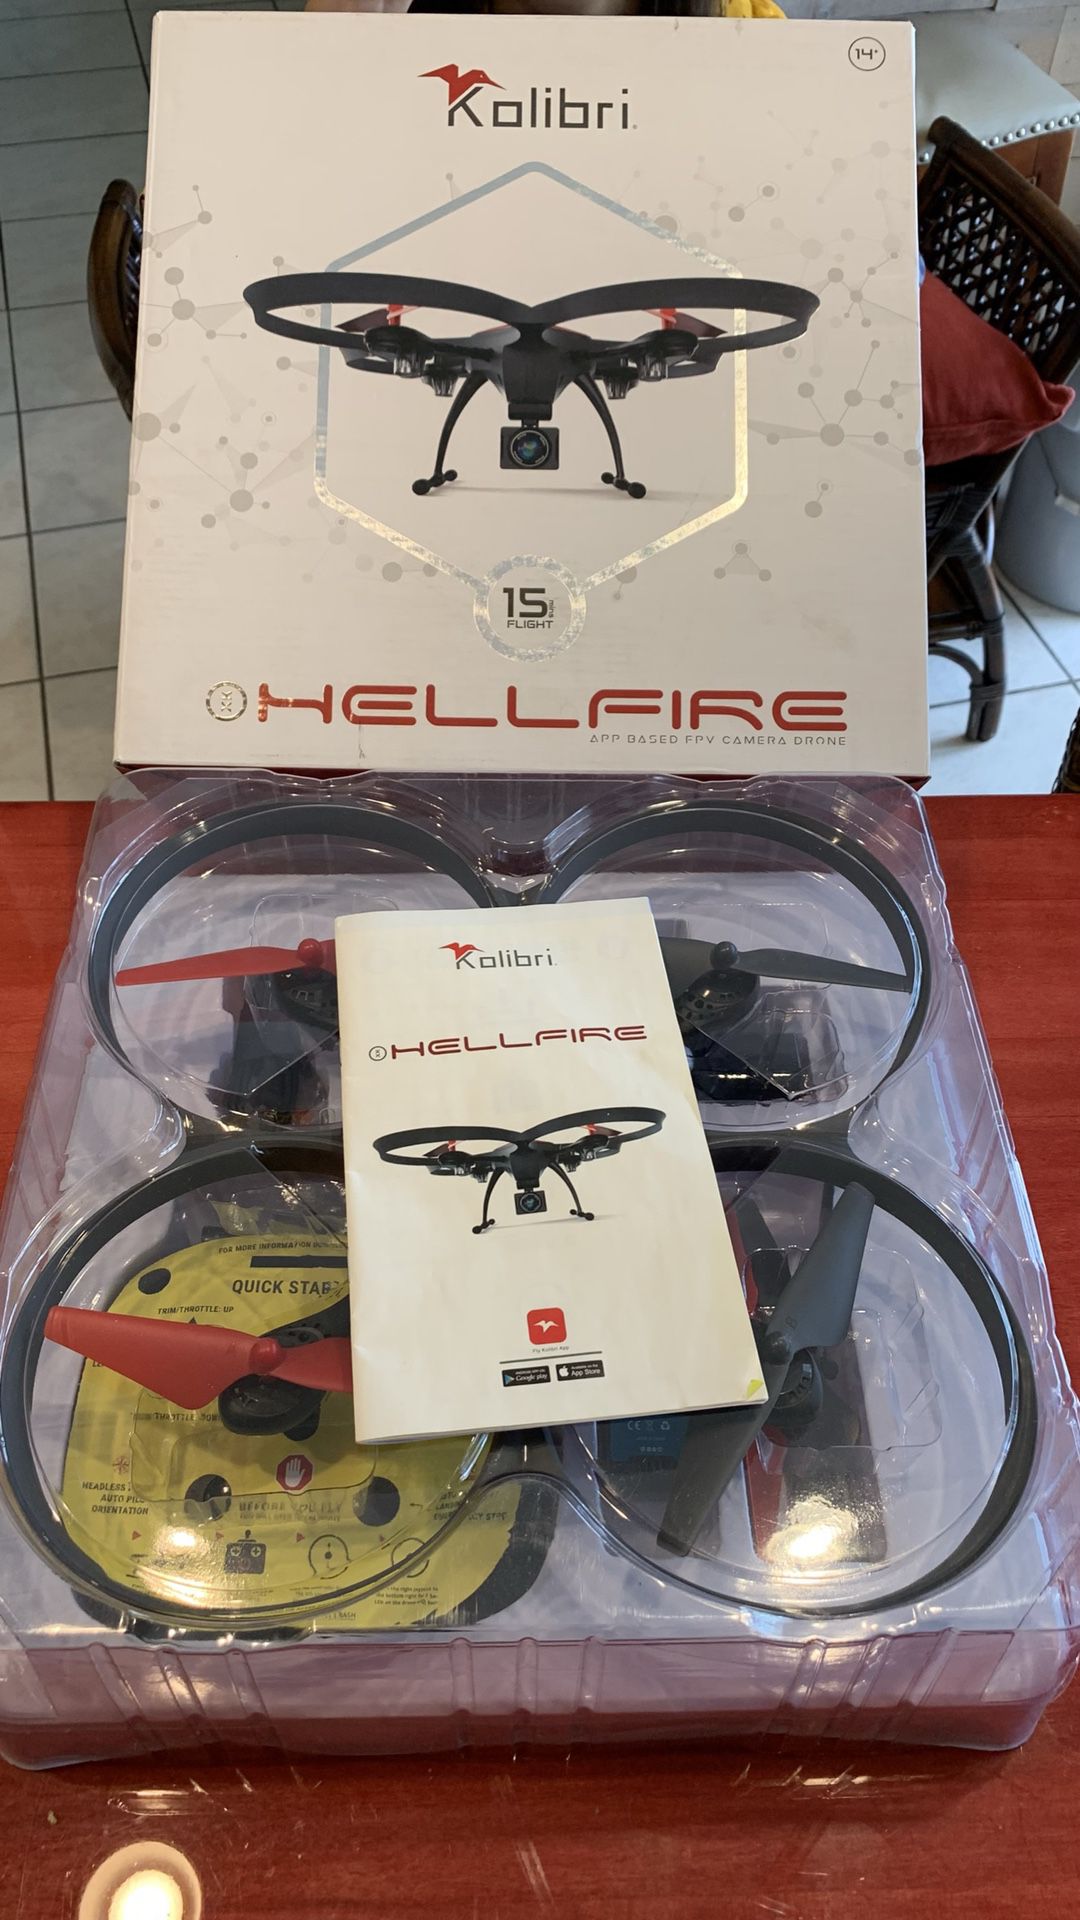 Kolibri Hellfire HD Camera Drone Kolibri XK6600 (GY)